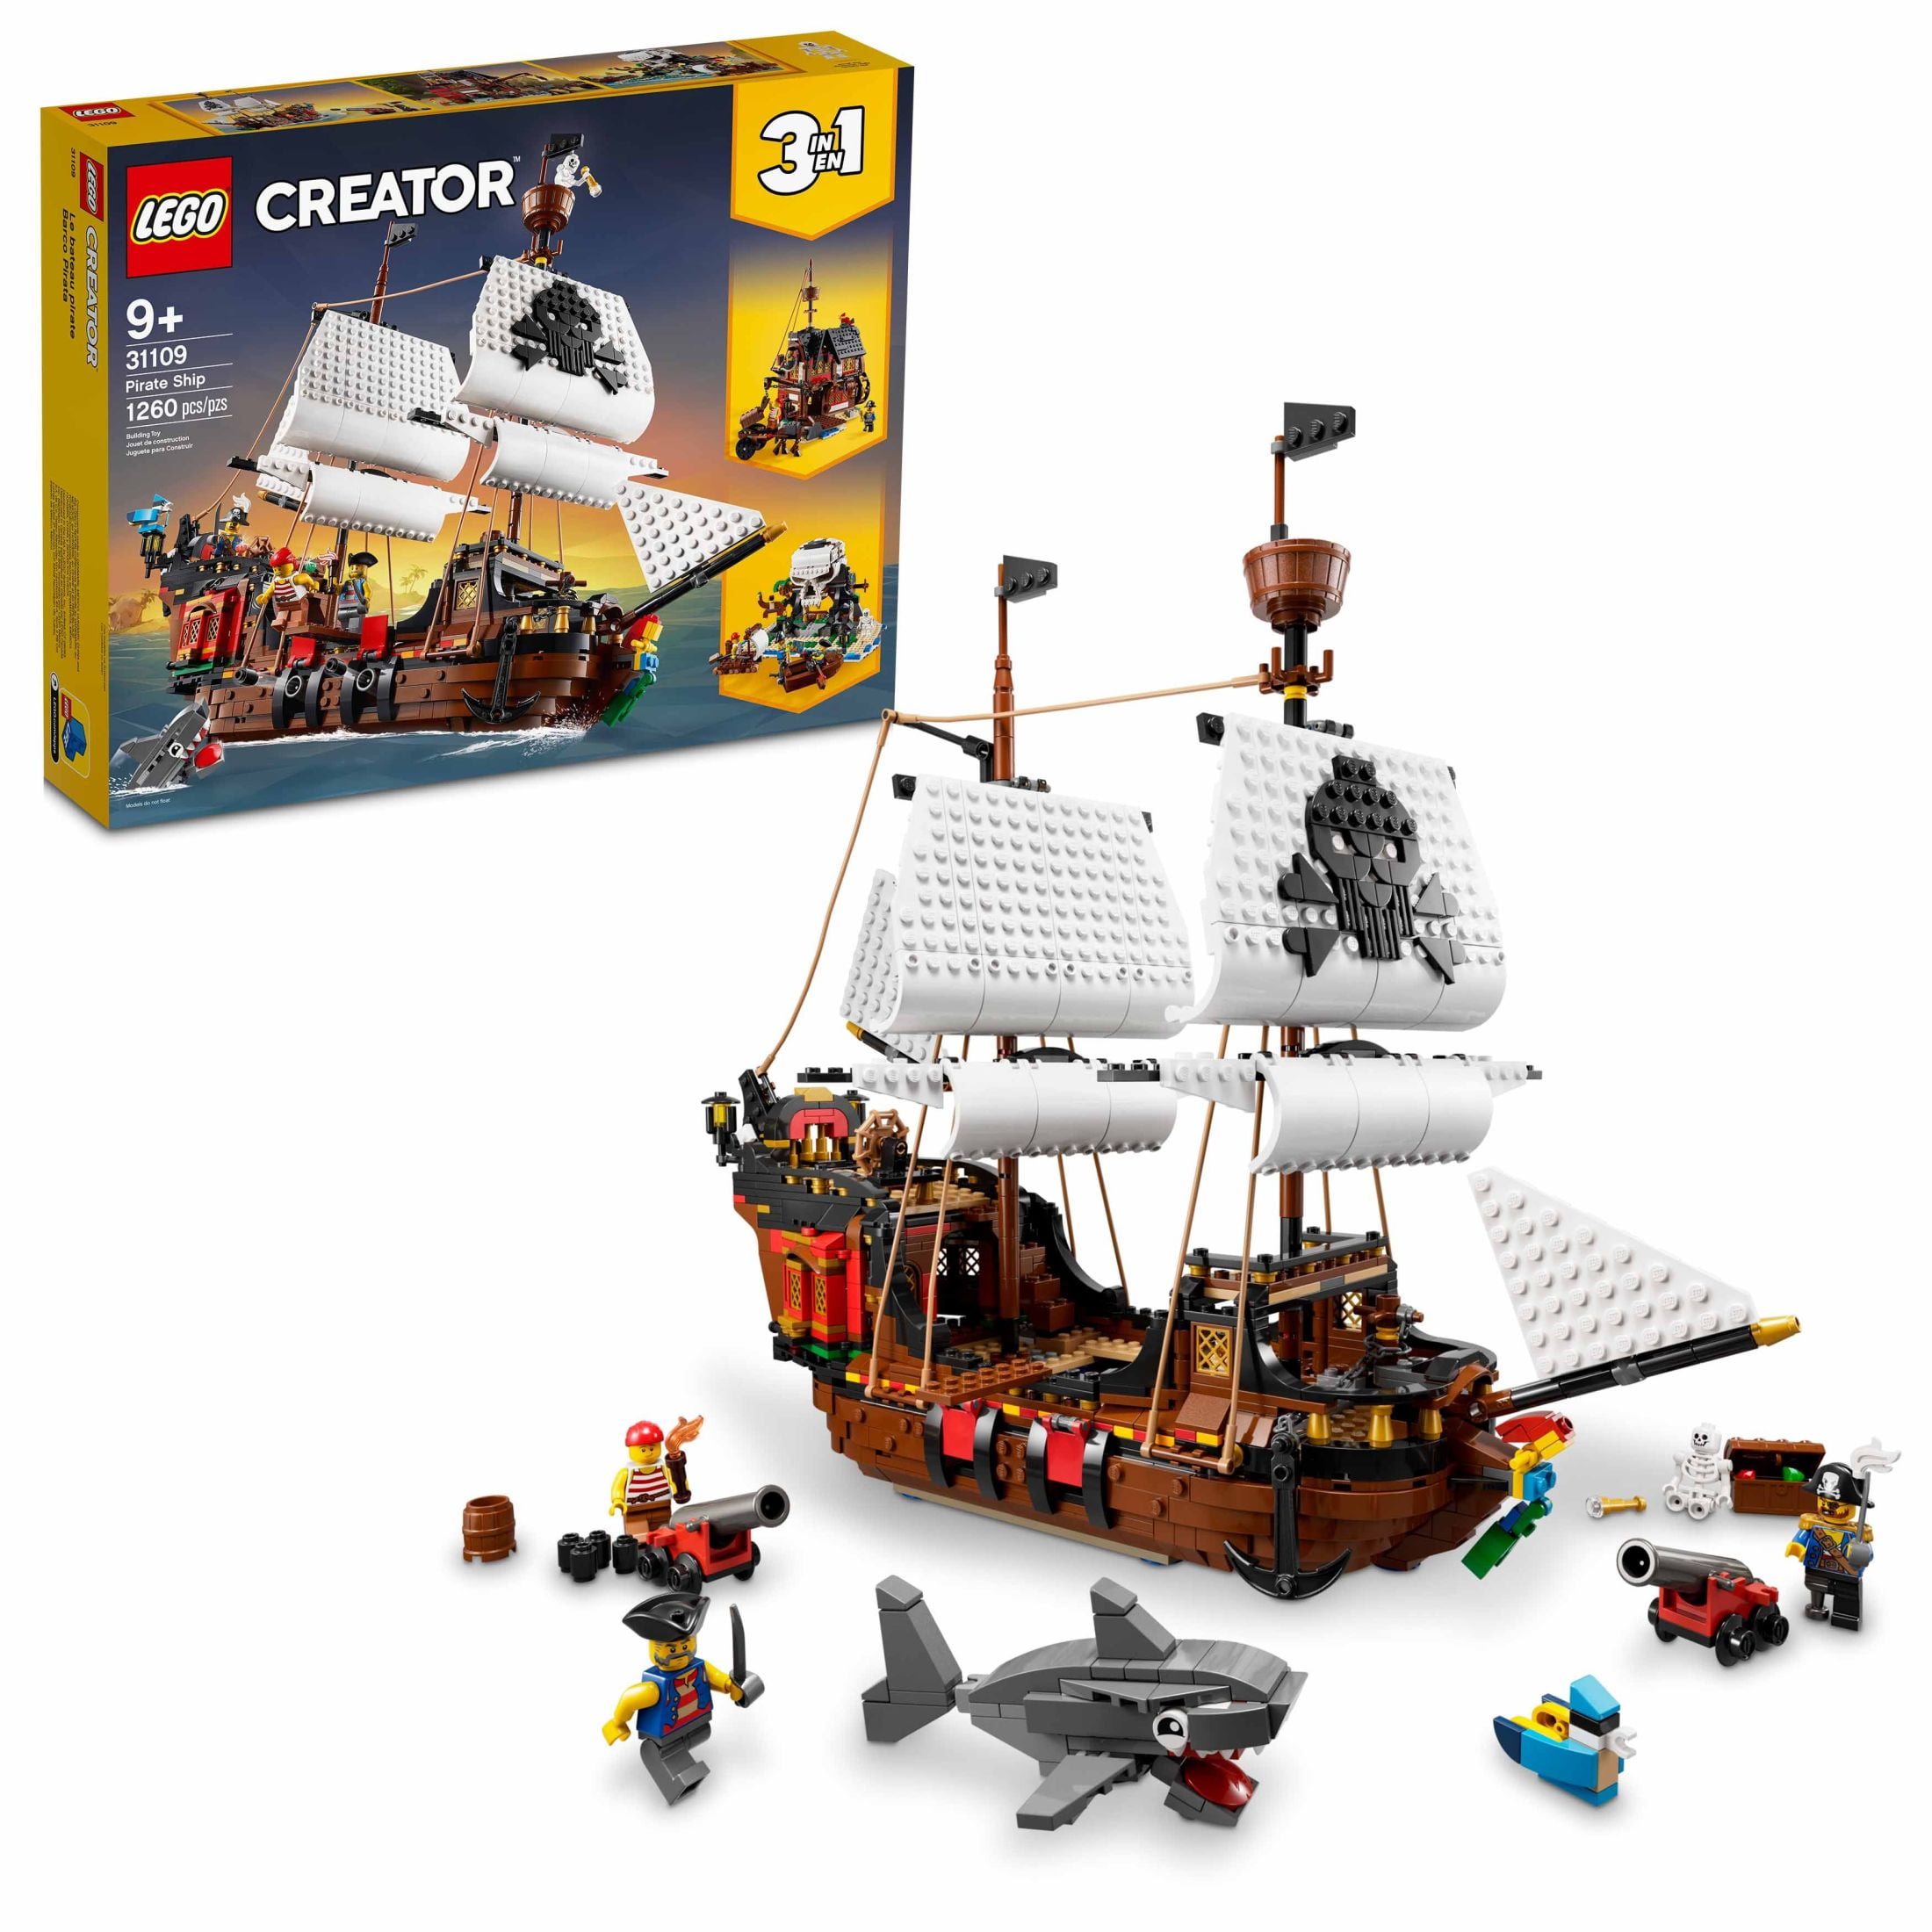 (Lego Creator) 31109 Pirate Ship